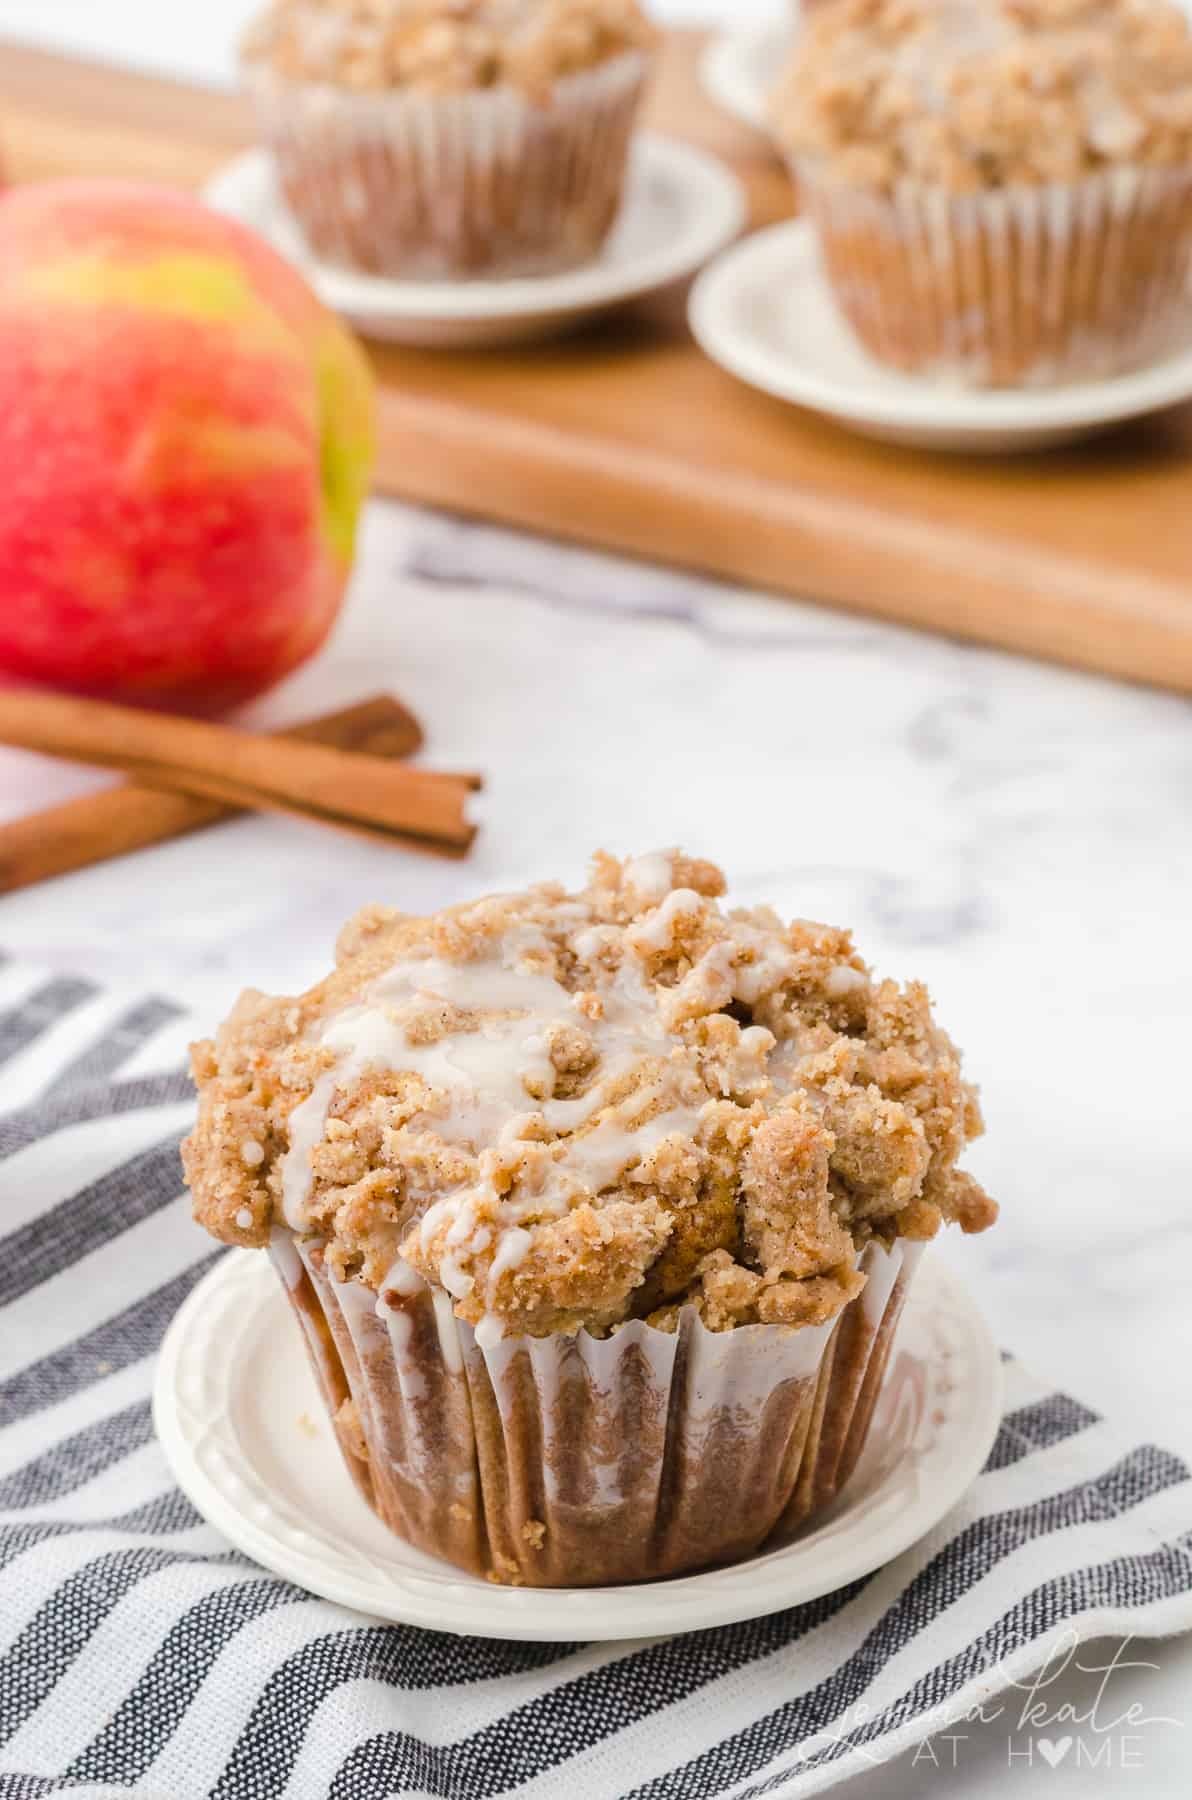 crumb topping on cinnamon apple muffin